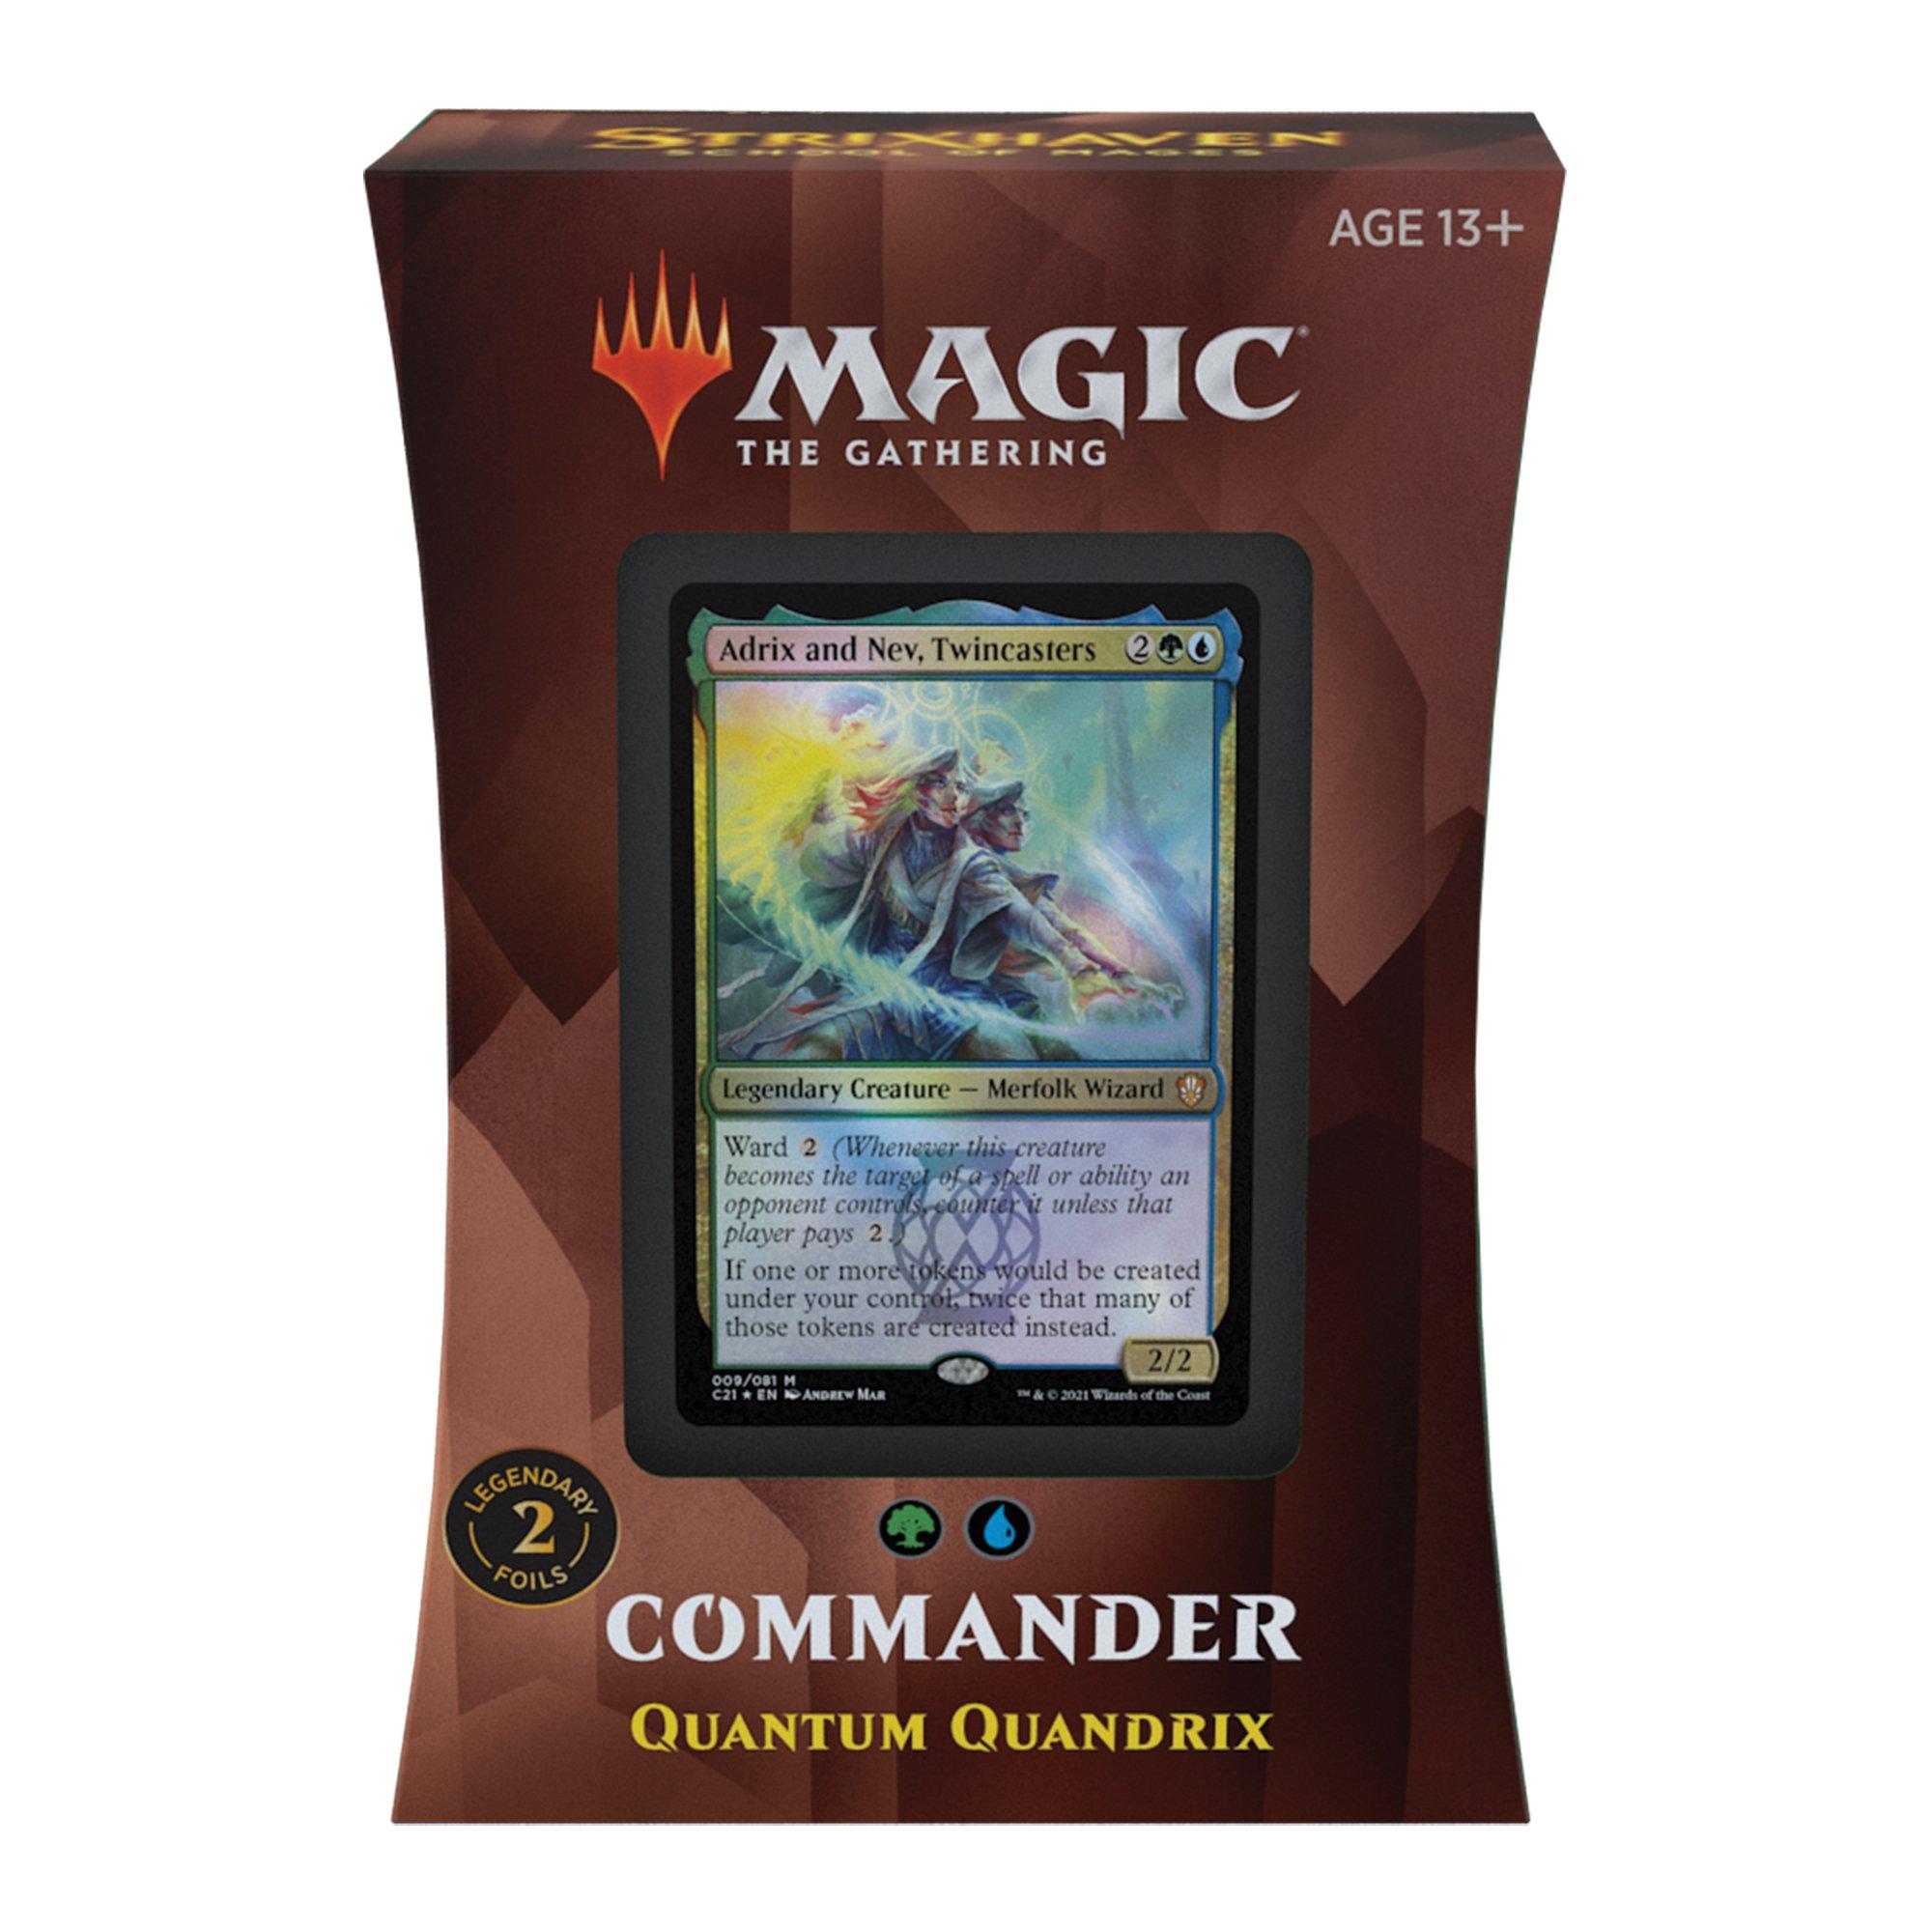 Magic: The Gathering Strixhaven Commander Deck (Assortment)